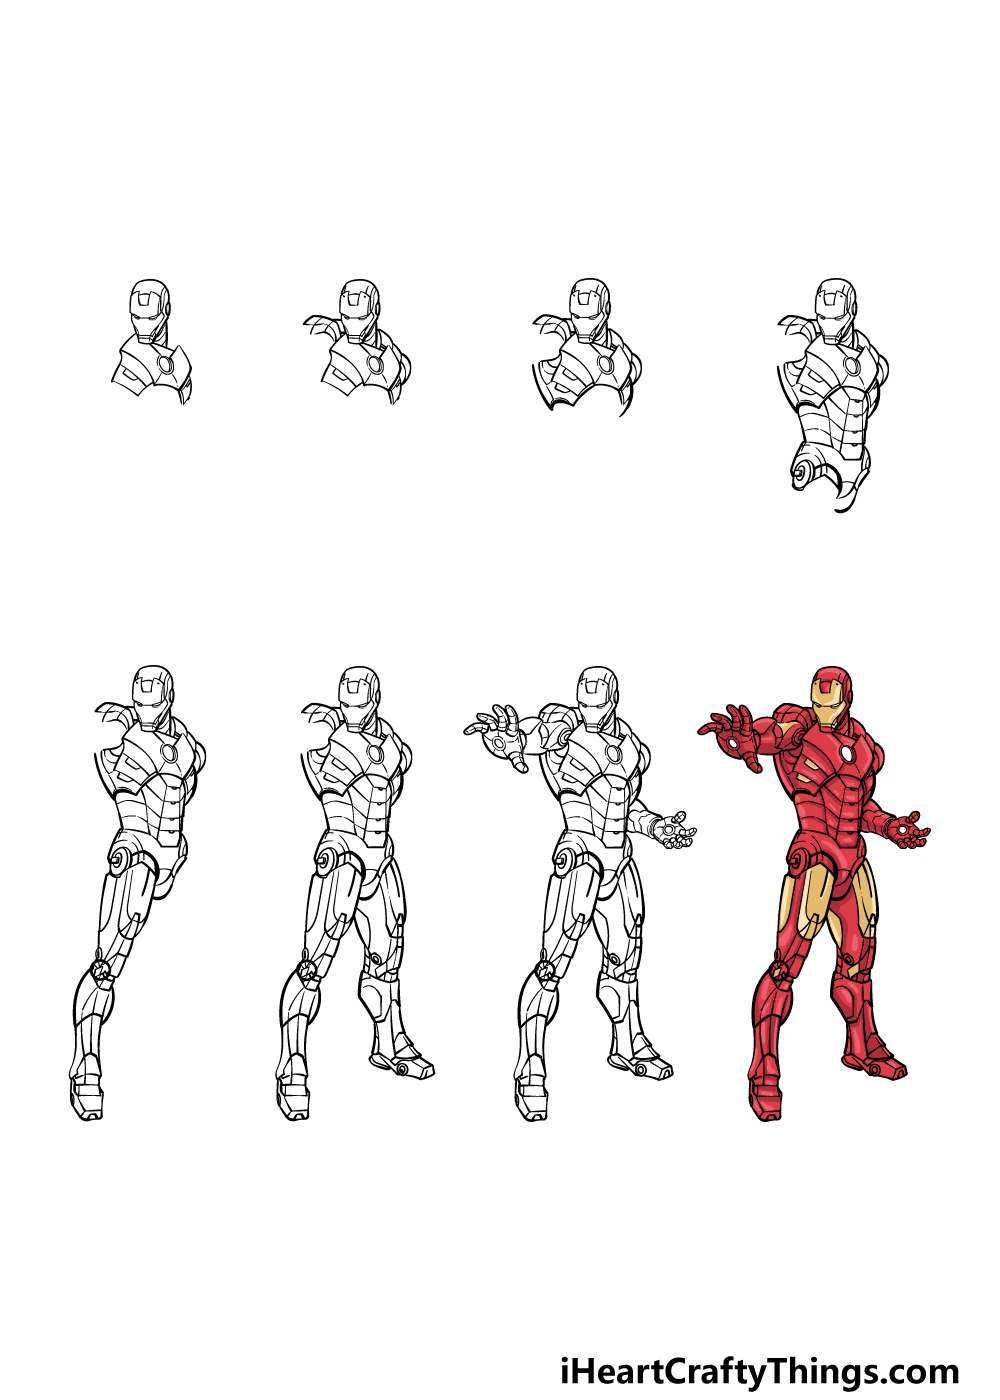 How To Draw Iron Man | Step By Step | Marvel - YouTube-saigonsouth.com.vn